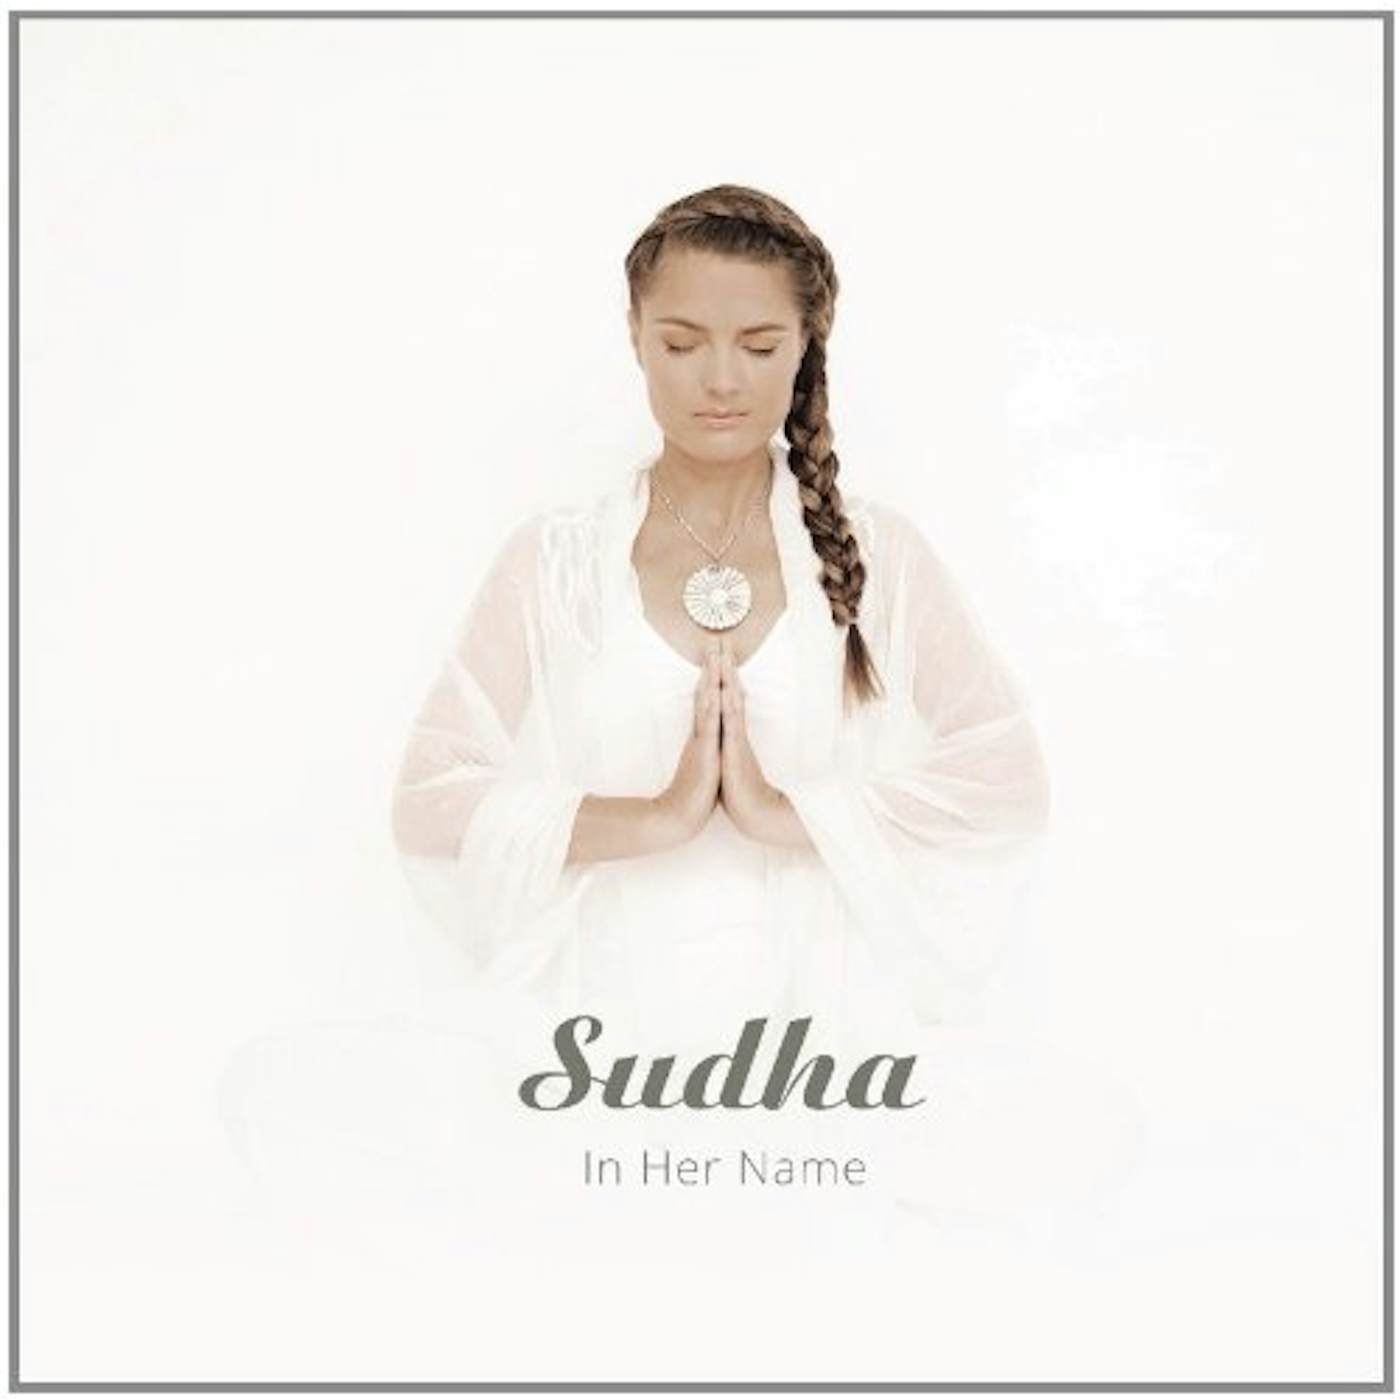 Sudha IN HER NAME CD